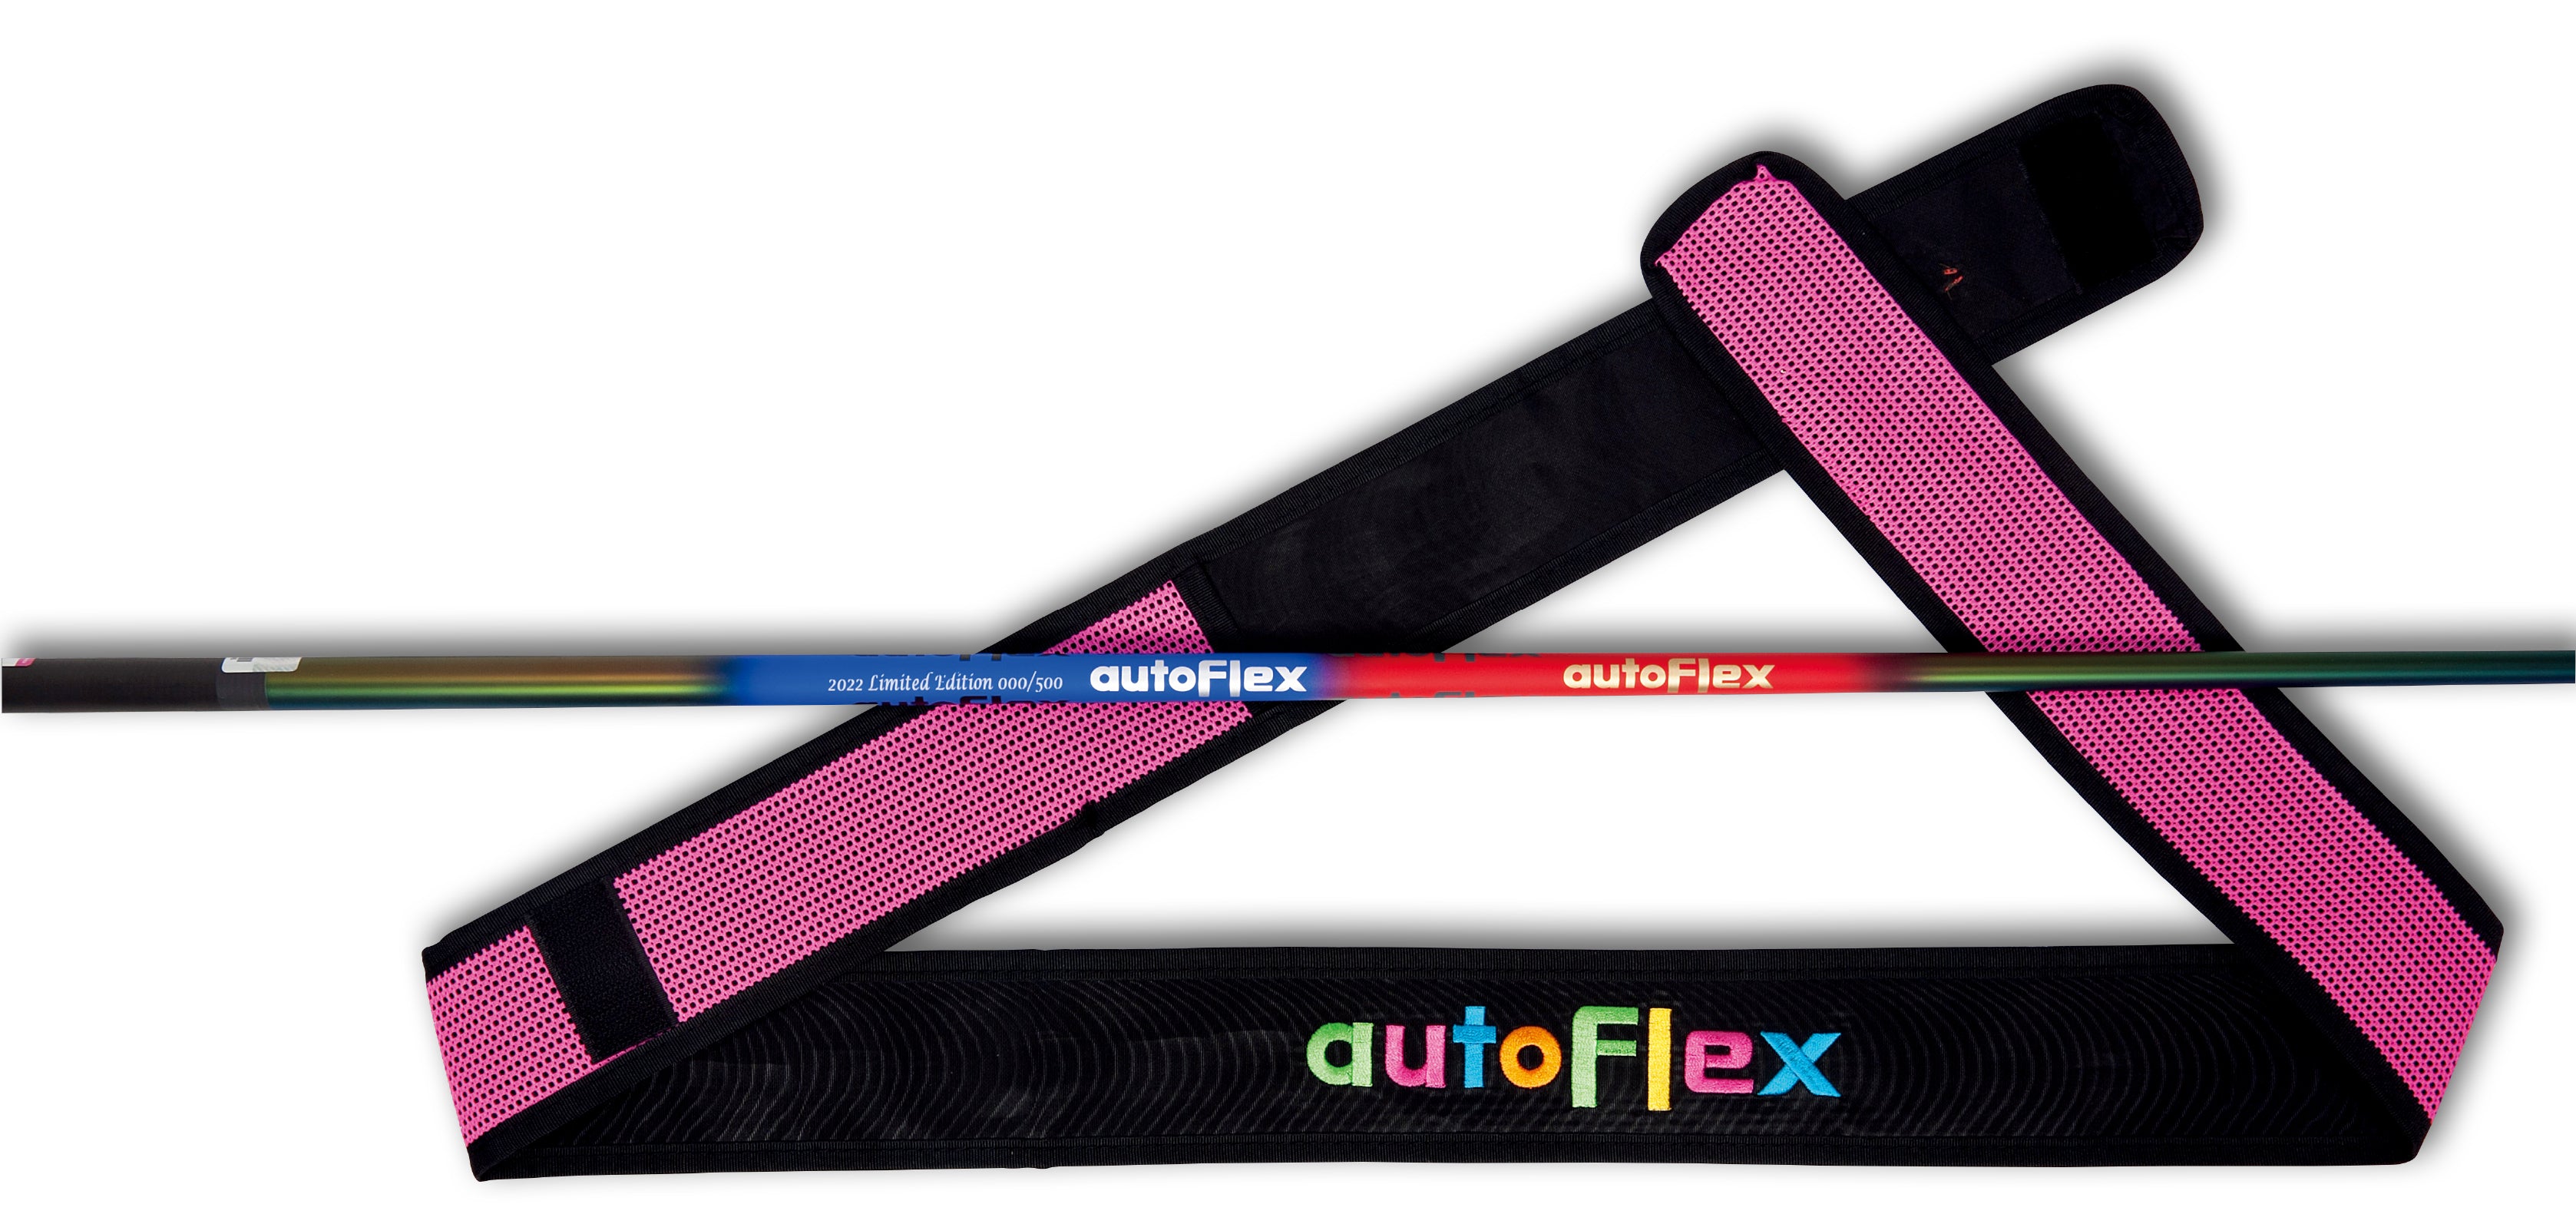 AutoFlex Shaft 2022 Limited Edition 限定版ドライバー用 – AUTOFLEX